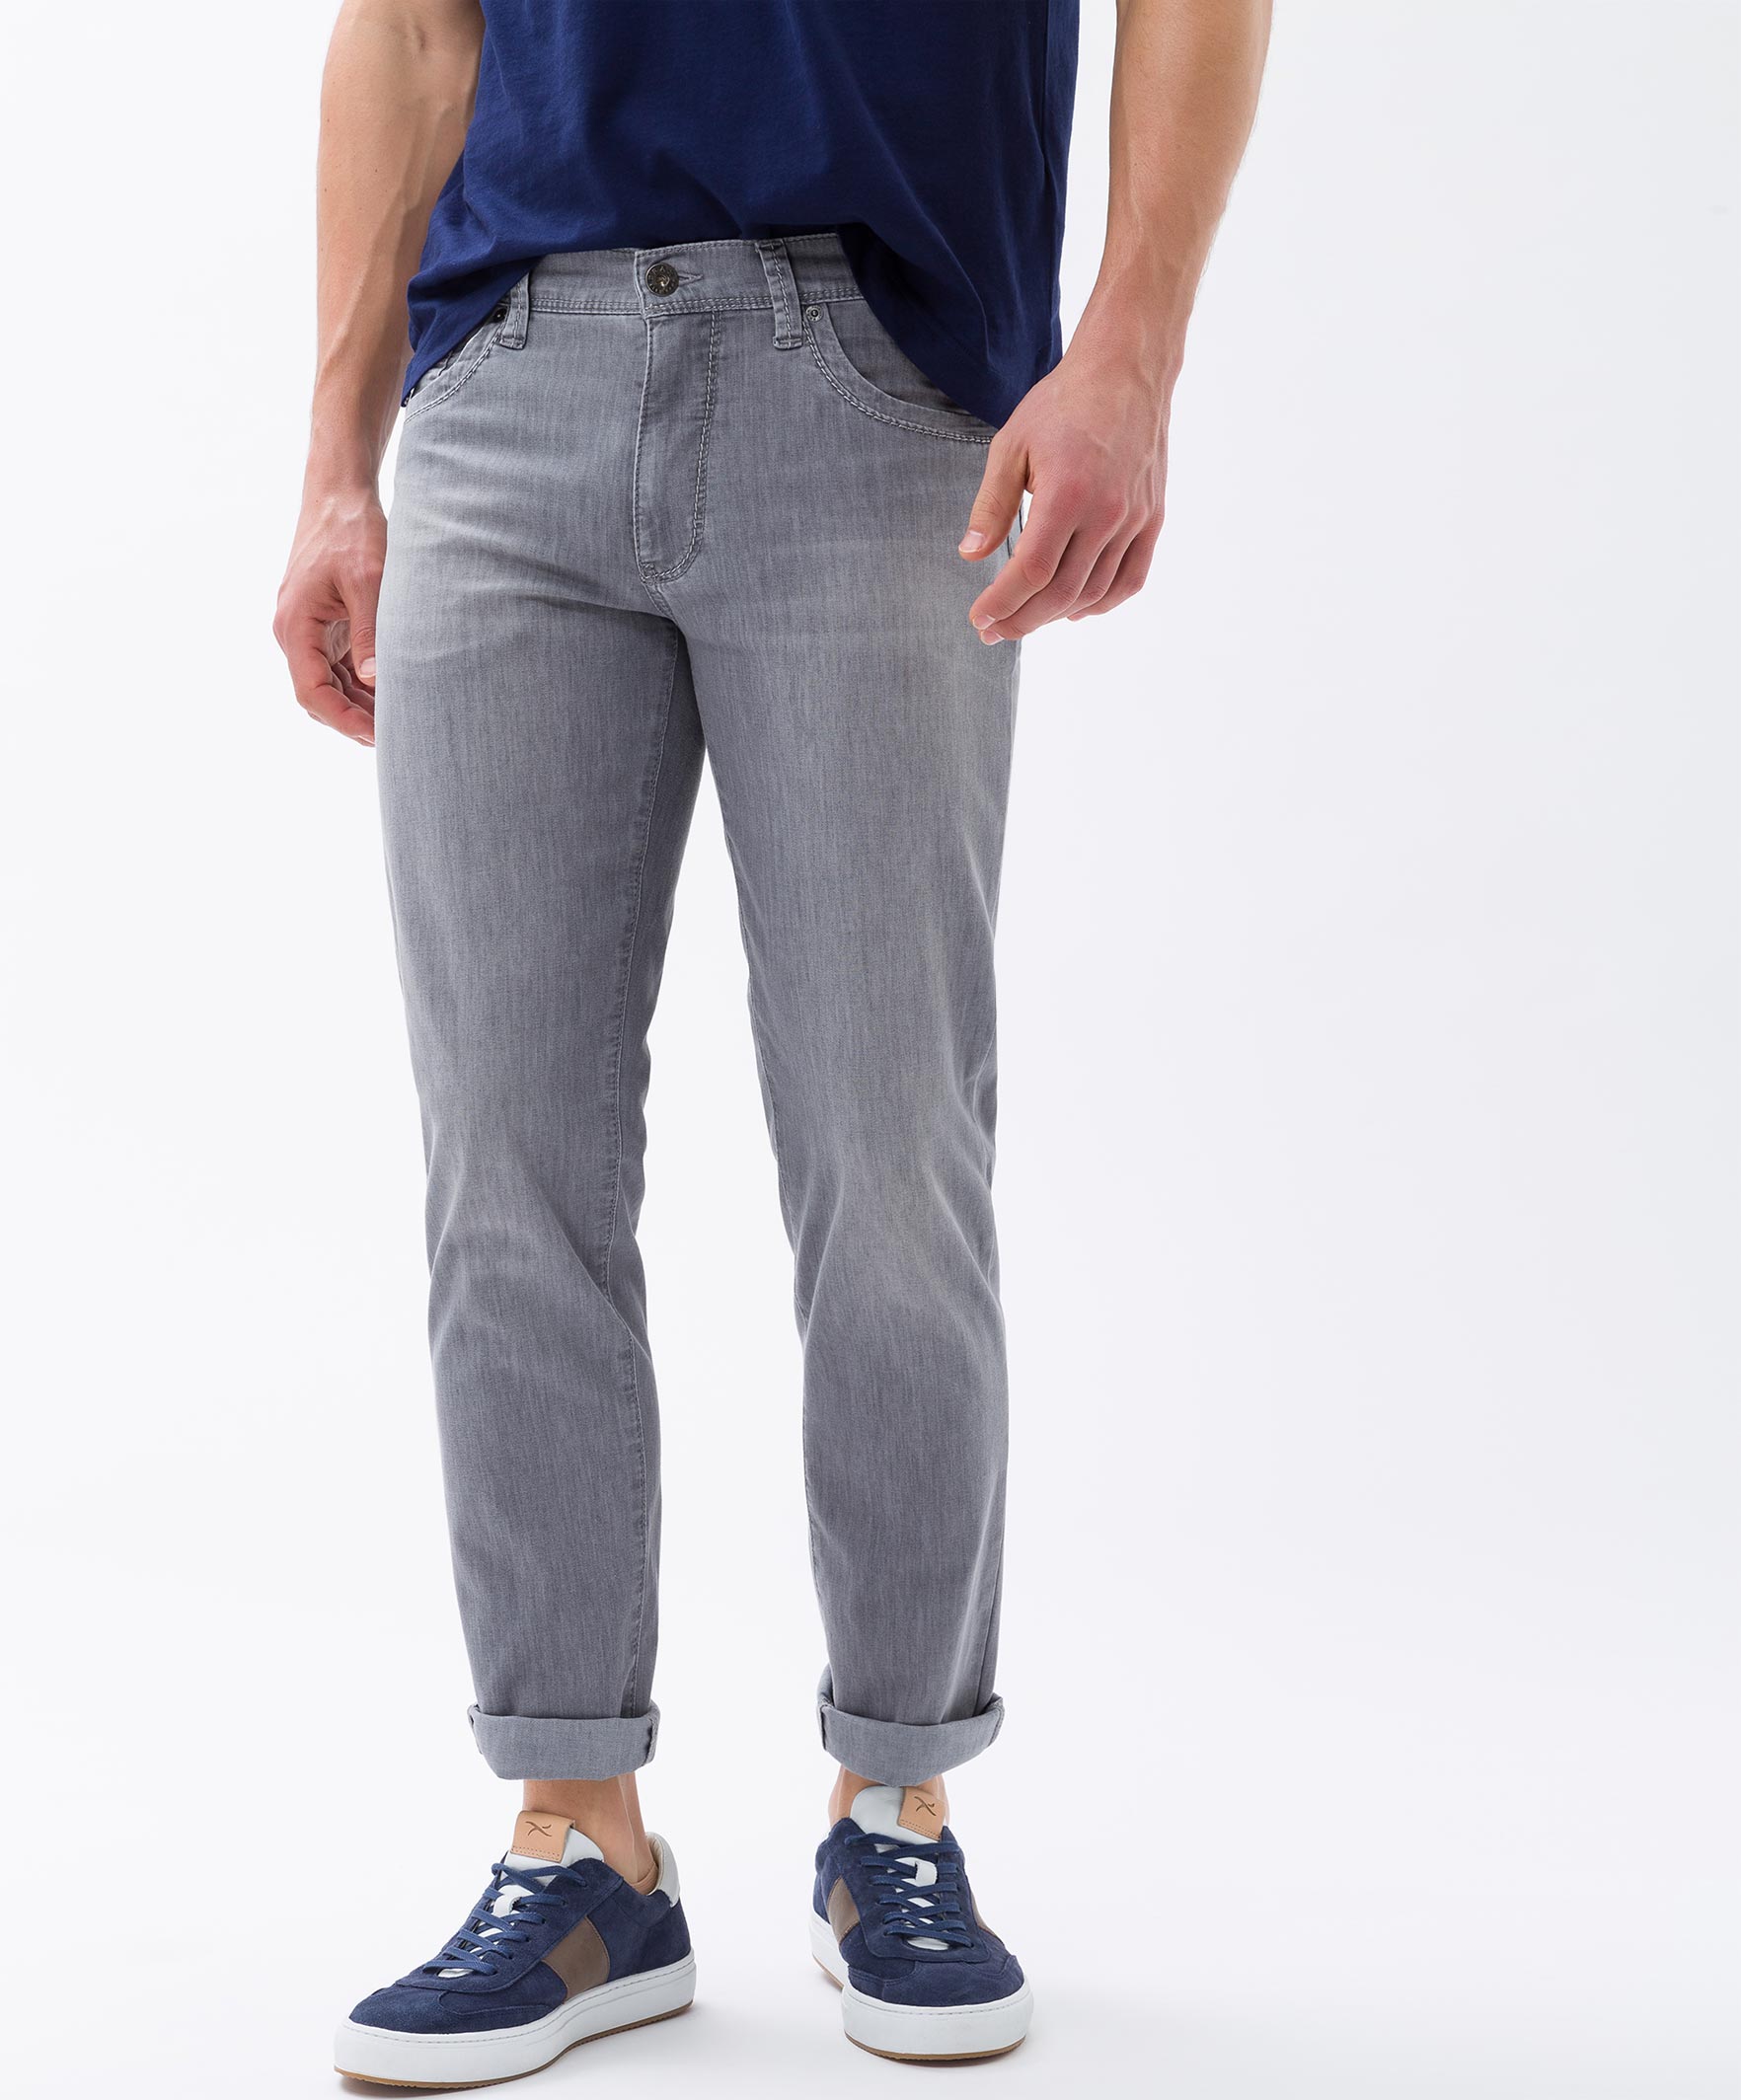 Brax Cadiz Ultralight Jeans Grey | Jan Rozing Men's Fashion